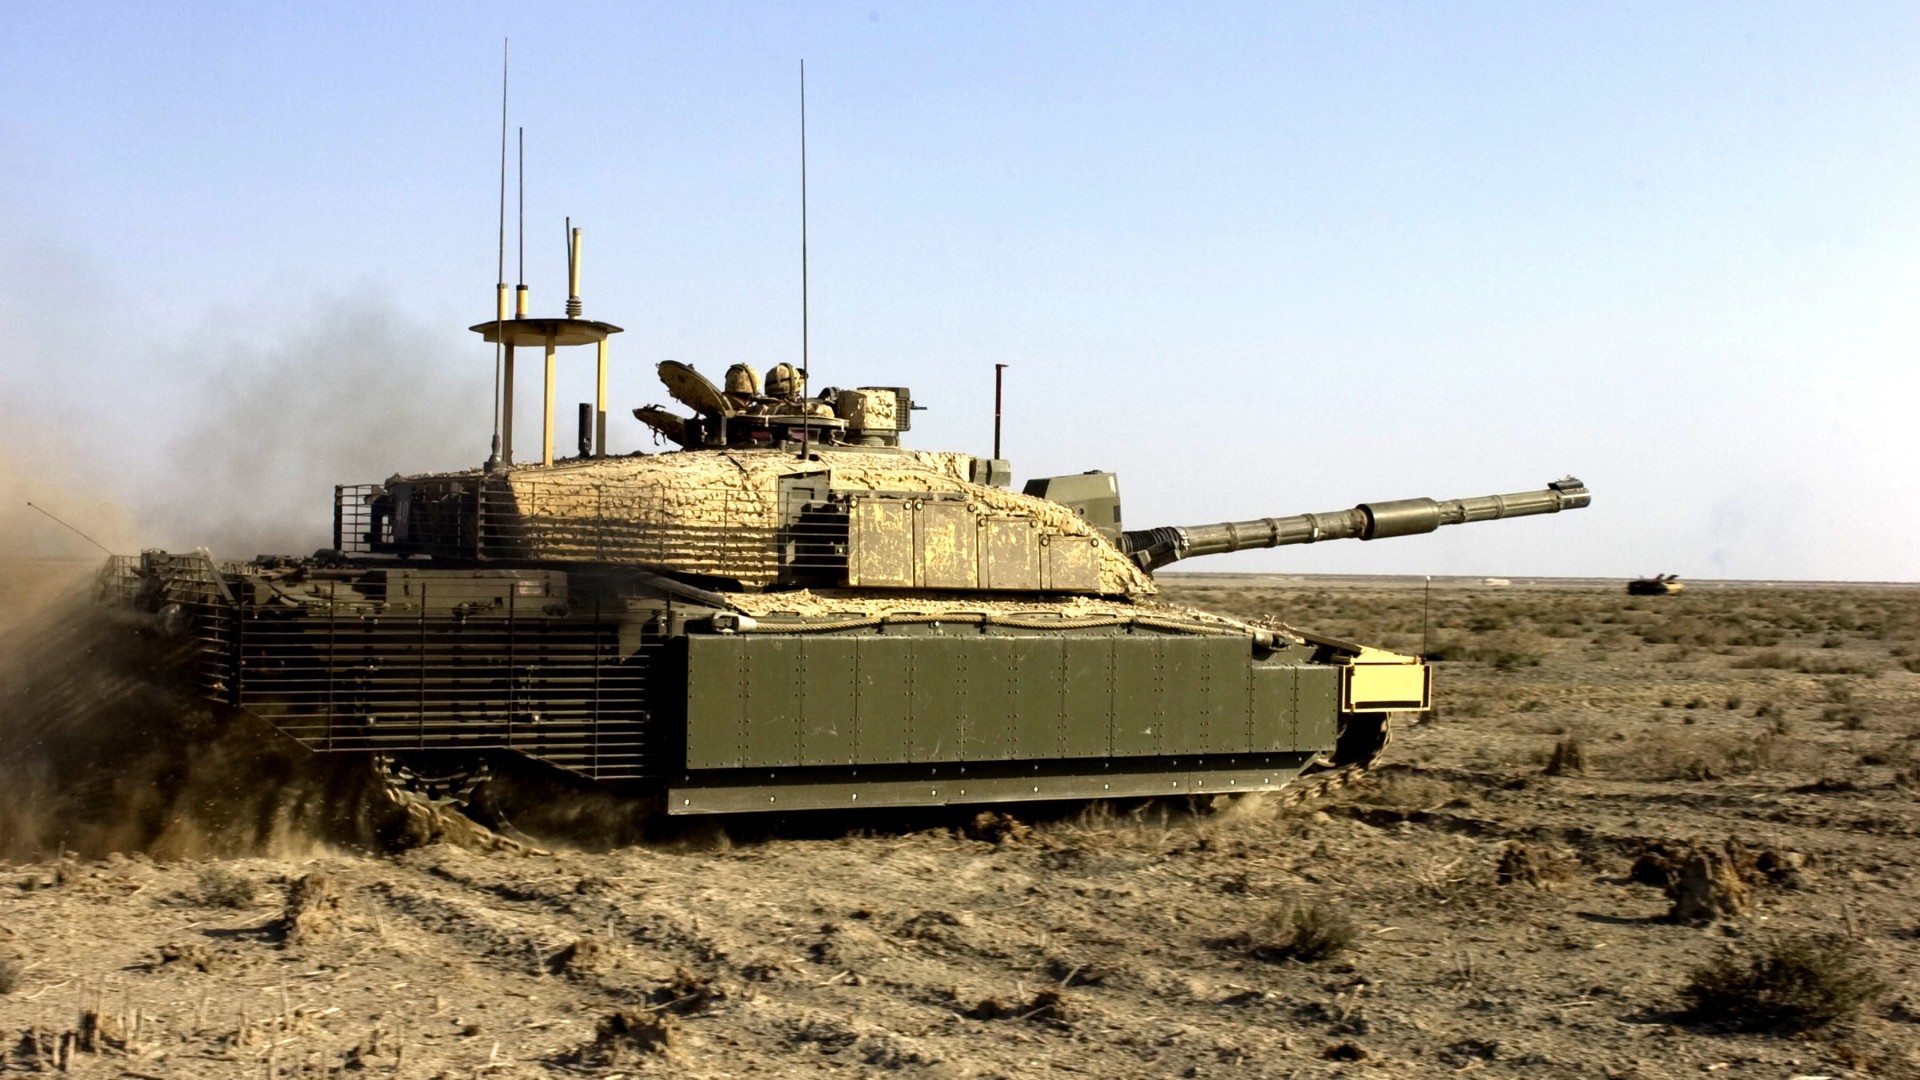 Челленджер 2, ОБТ, танк, Великобритания, Challenger 2, FV4034, MBT, tank, British Army, United Kingdom, armoured, desert (horizontal)